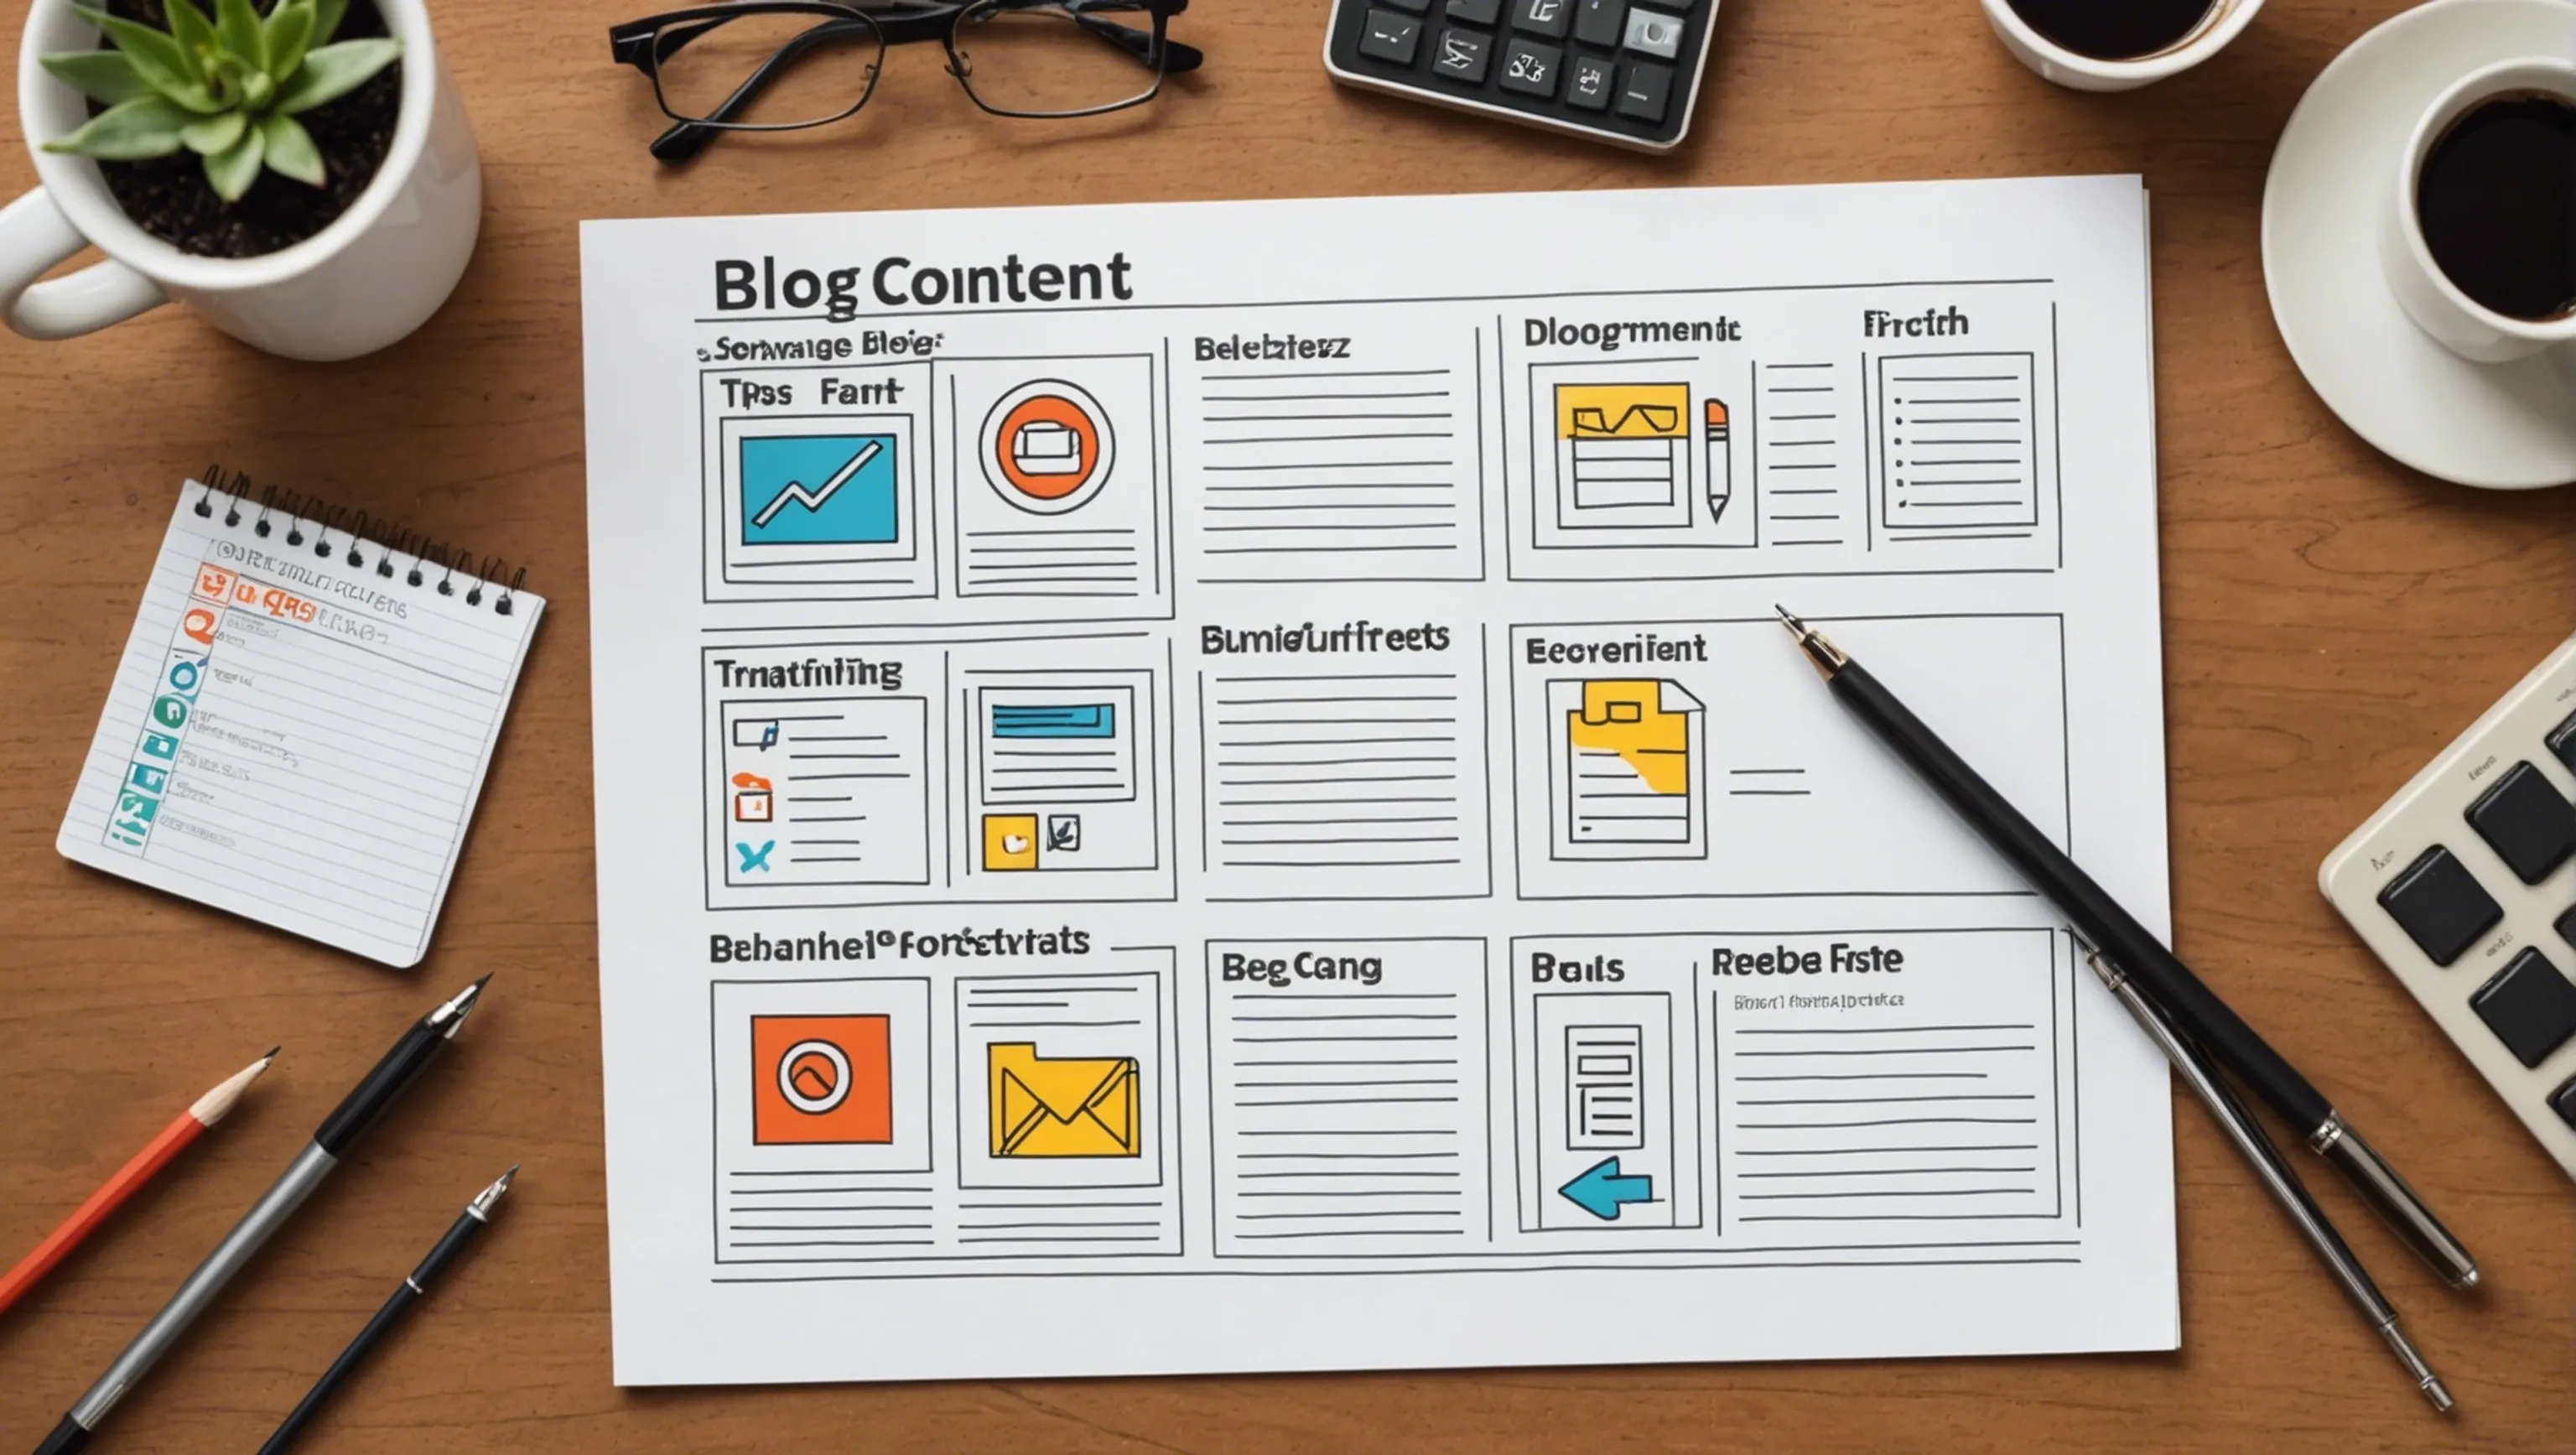 Tips for effective repurposing of blog content